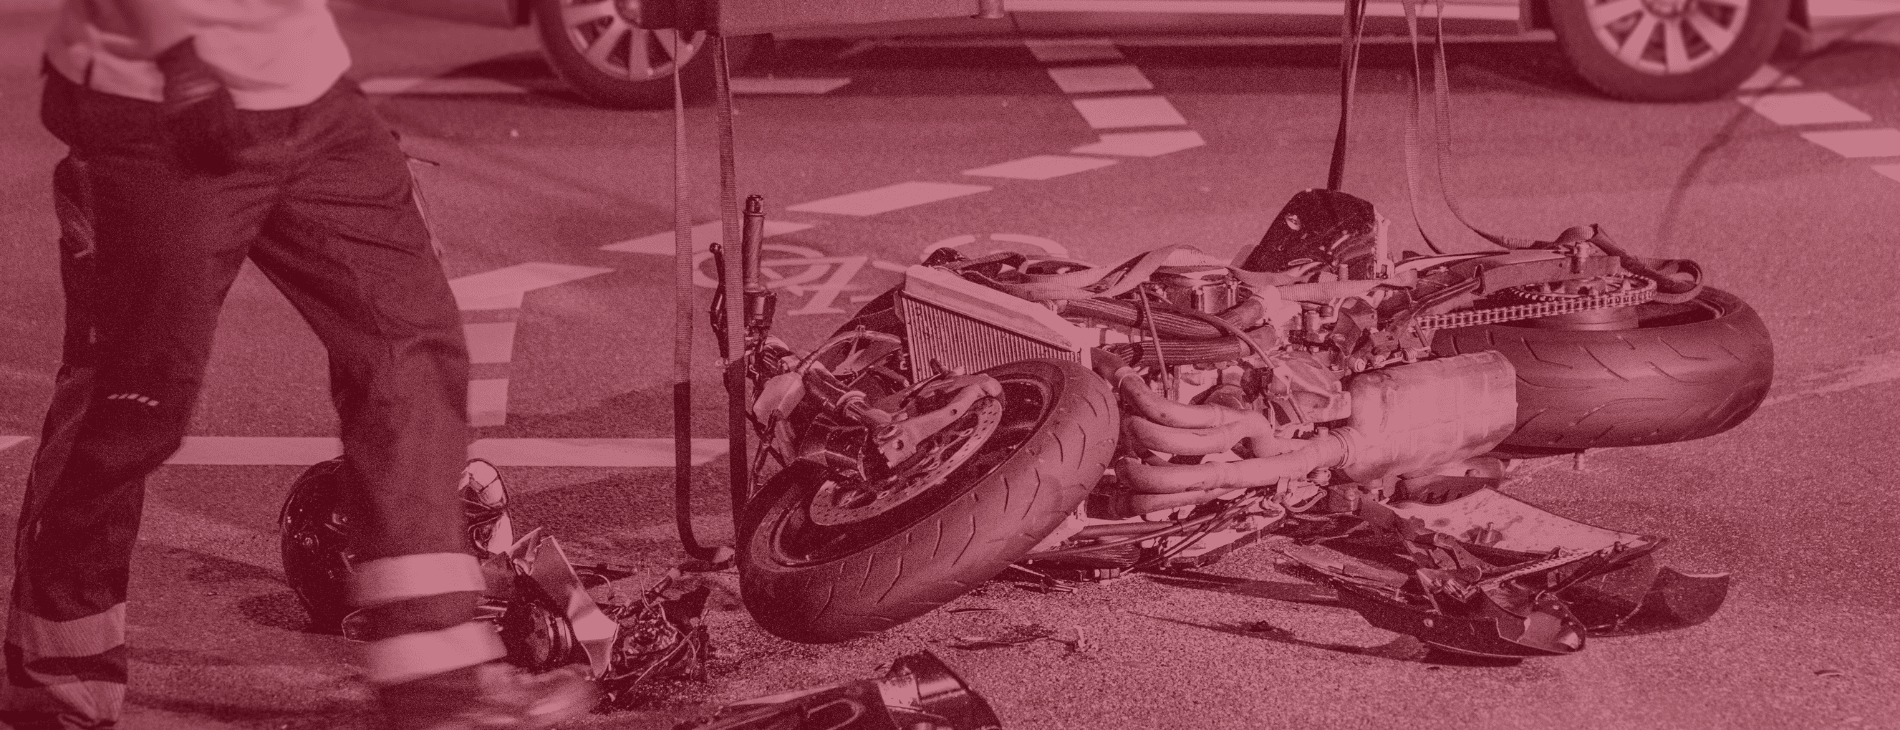 Tujunga Motorcycle Crash Killed One Motorcyclist in Los Angeles (4)